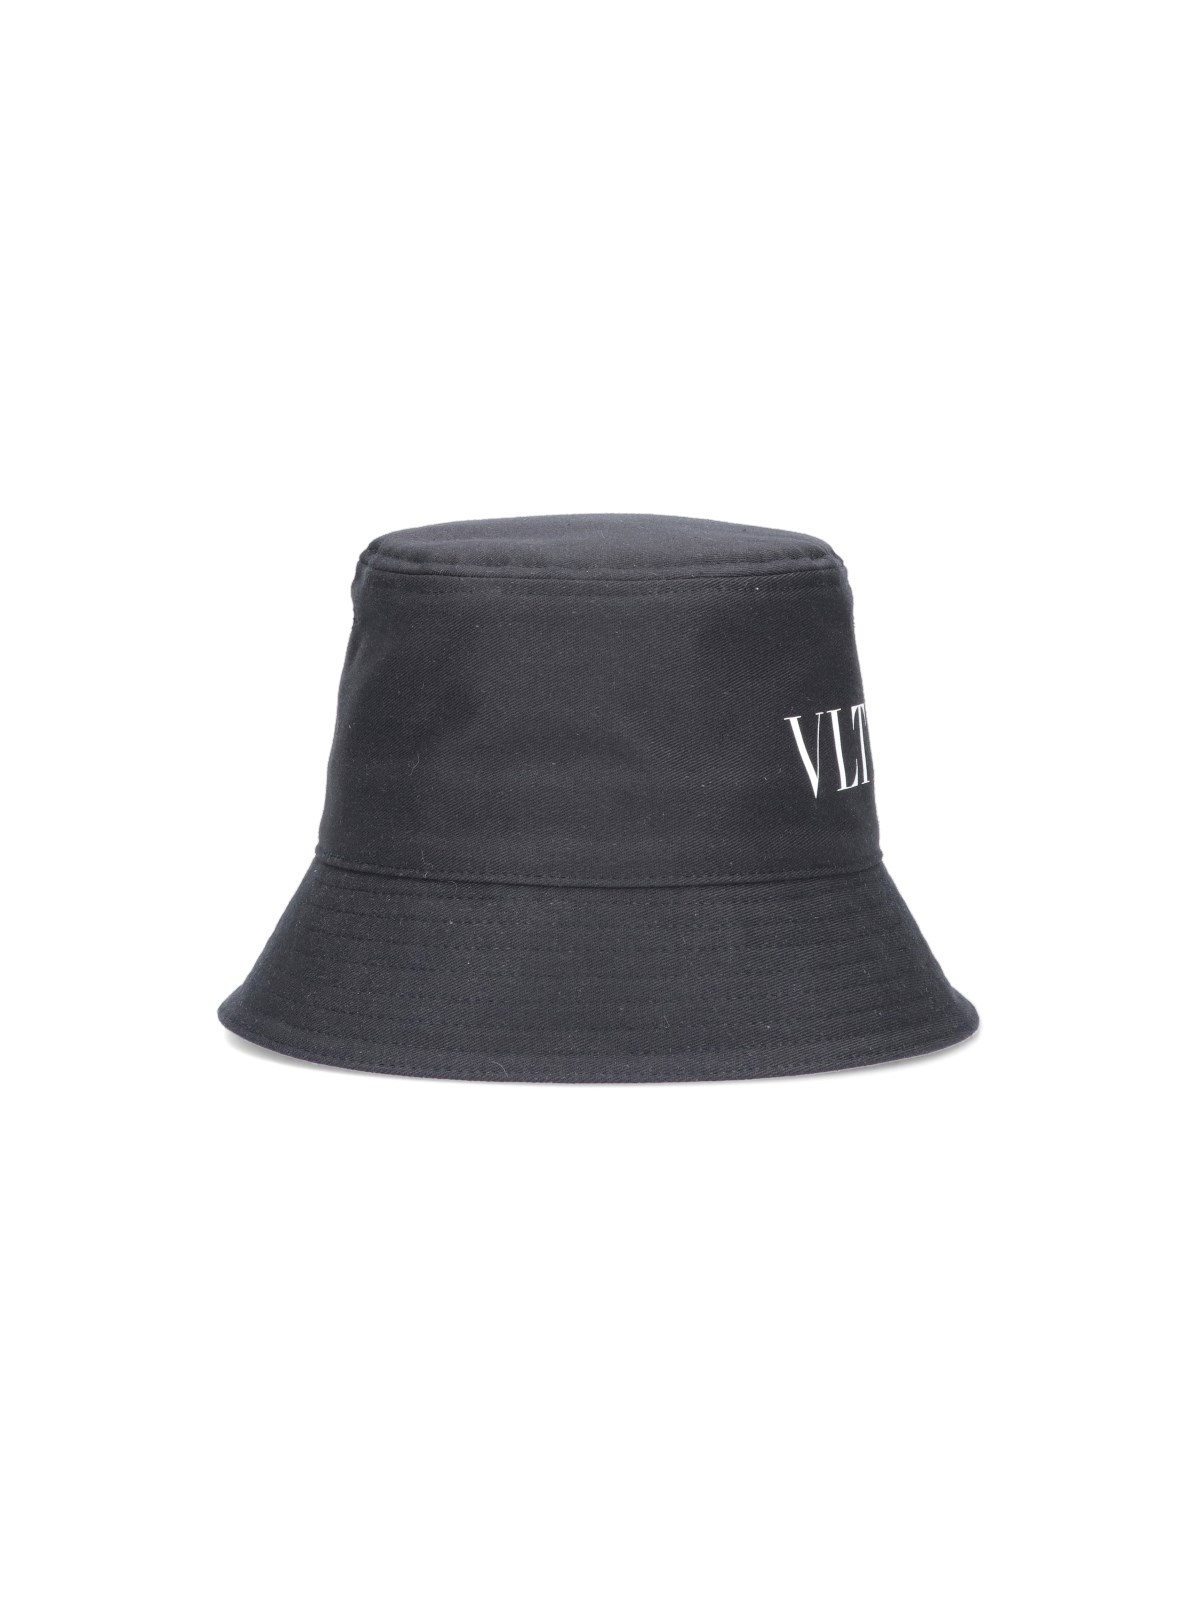 'VLTN' BUCKET HAT - 1